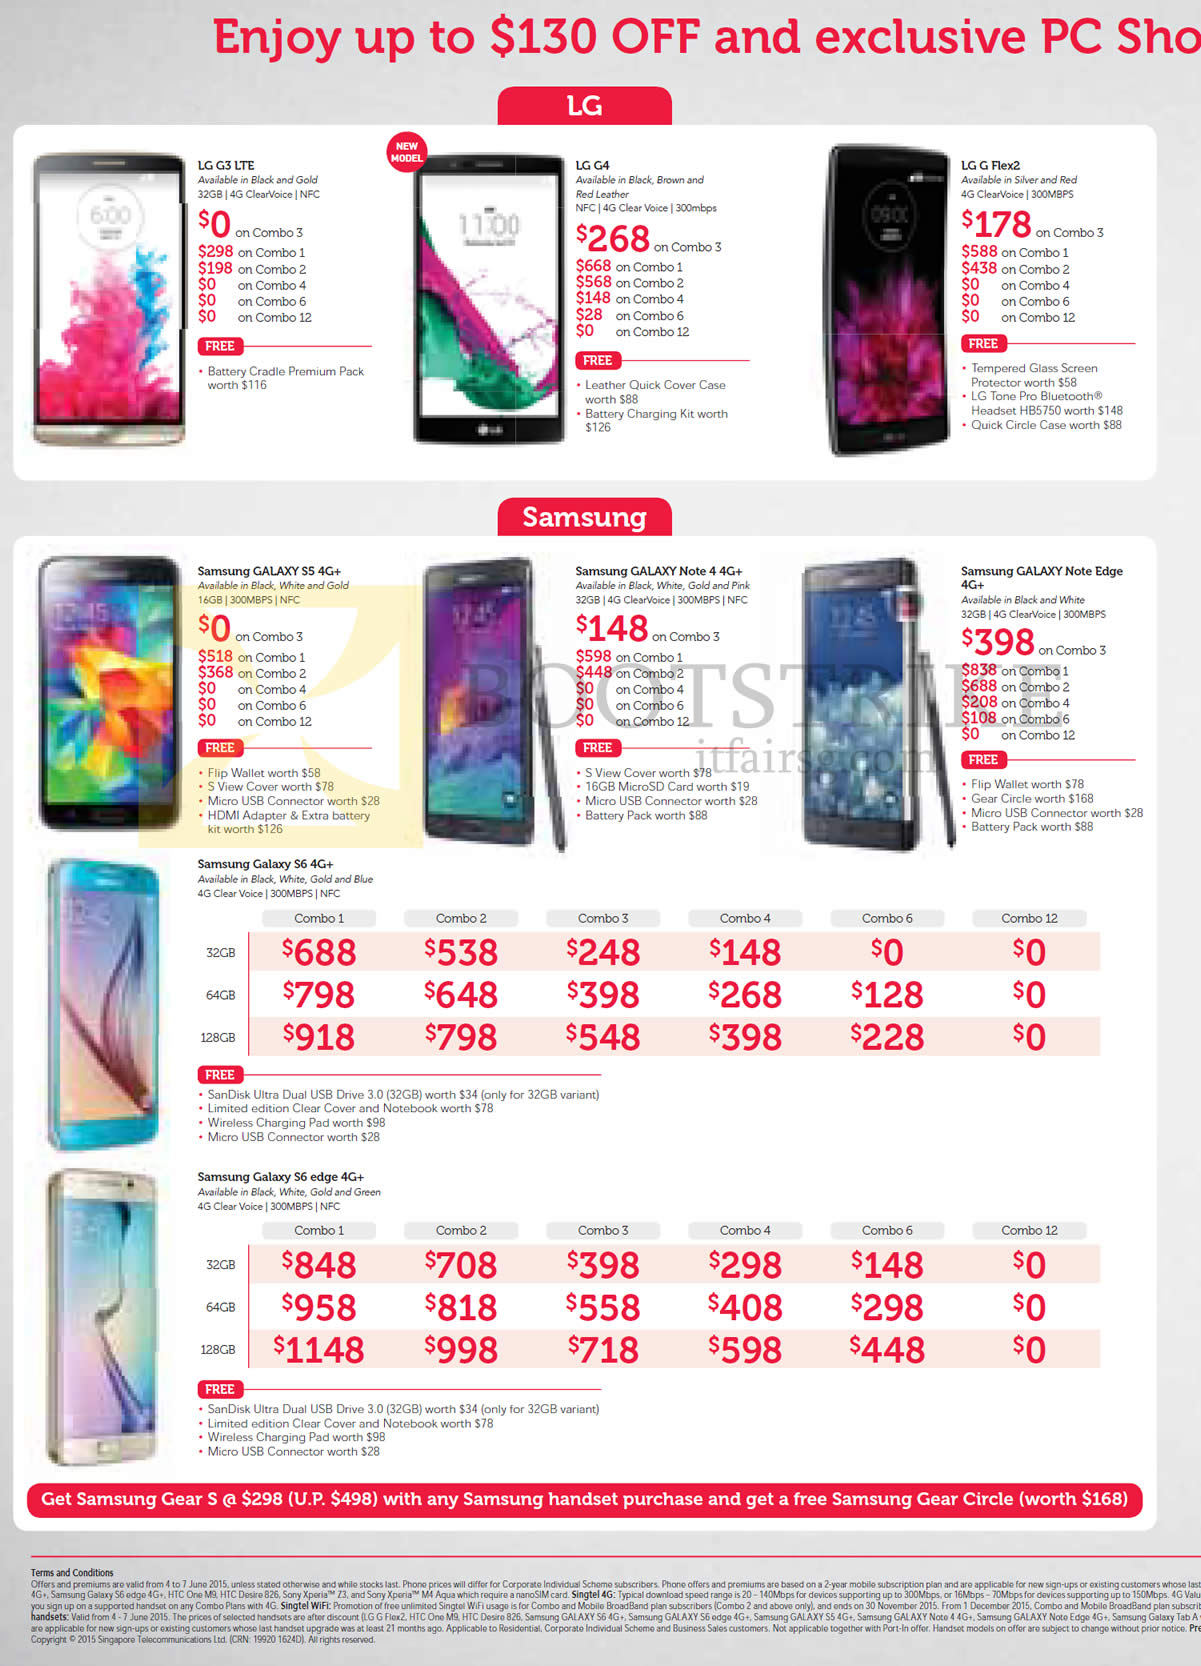 PC SHOW 2015 price list image brochure of Singtel Mobile LG G3 LTE, G4, G Flex2, Samsung GALAXY S5, Note 4, Note Edge, S6 Edge